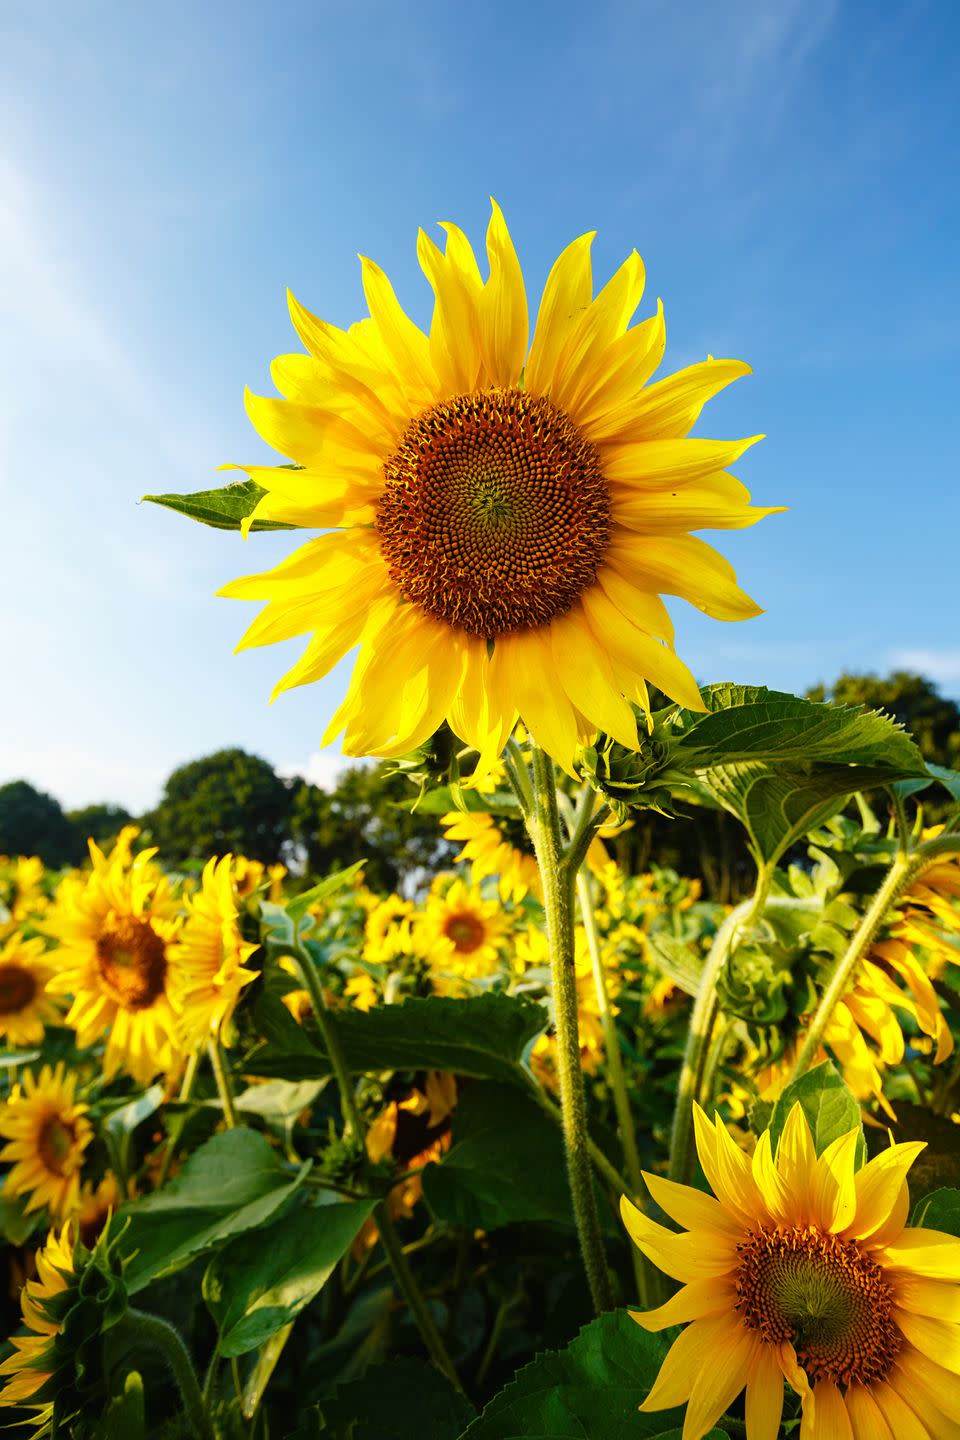 26) Celebrate sunflower season.